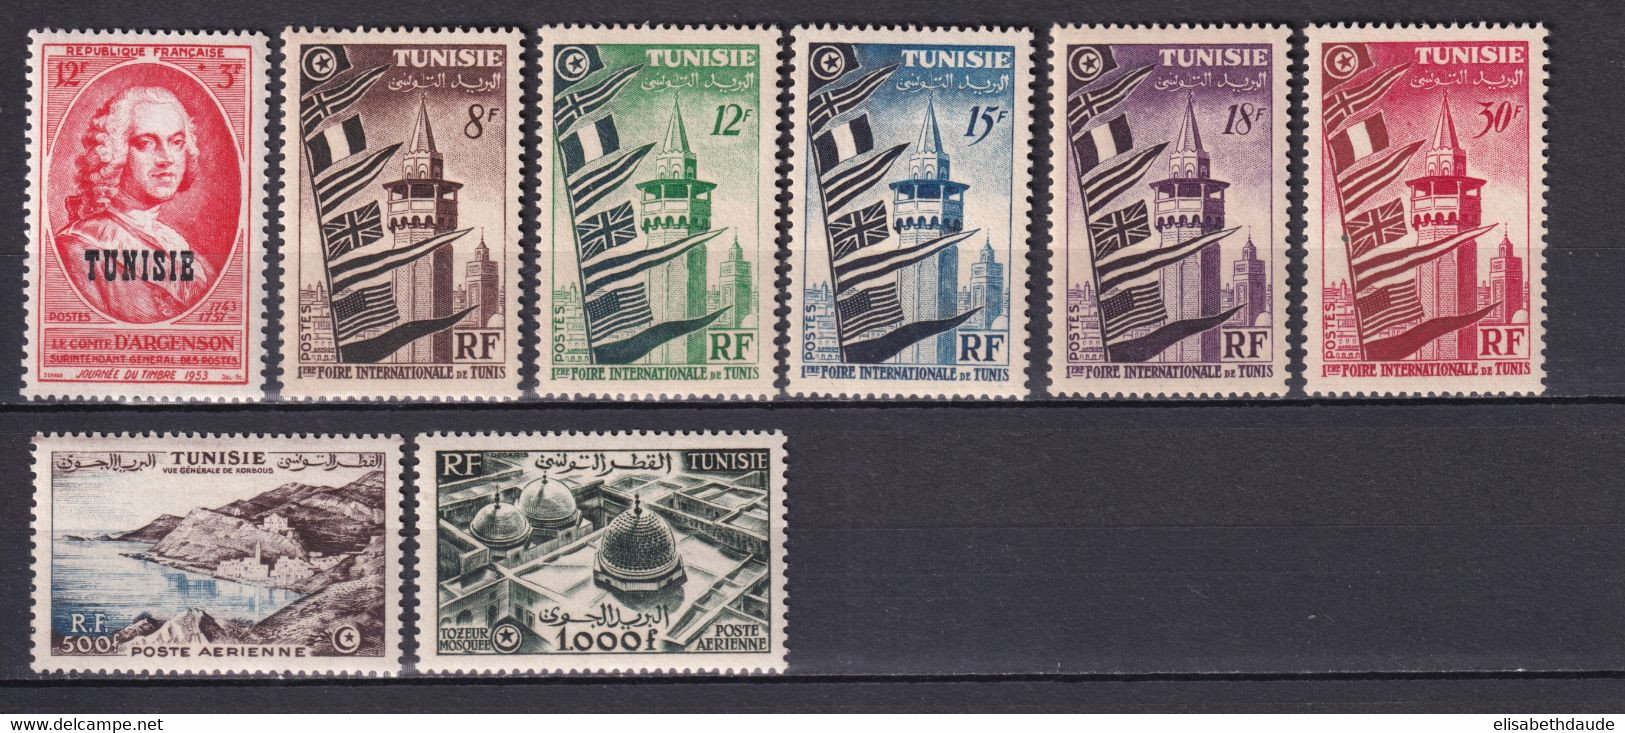 TUNISIE - 1953 - ANNEE COMPLETE AVEC POSTE AERIENNE - YVERT N° 359/364 +A18/19 * MLH - COTE = 111 EUR. - Nuevos